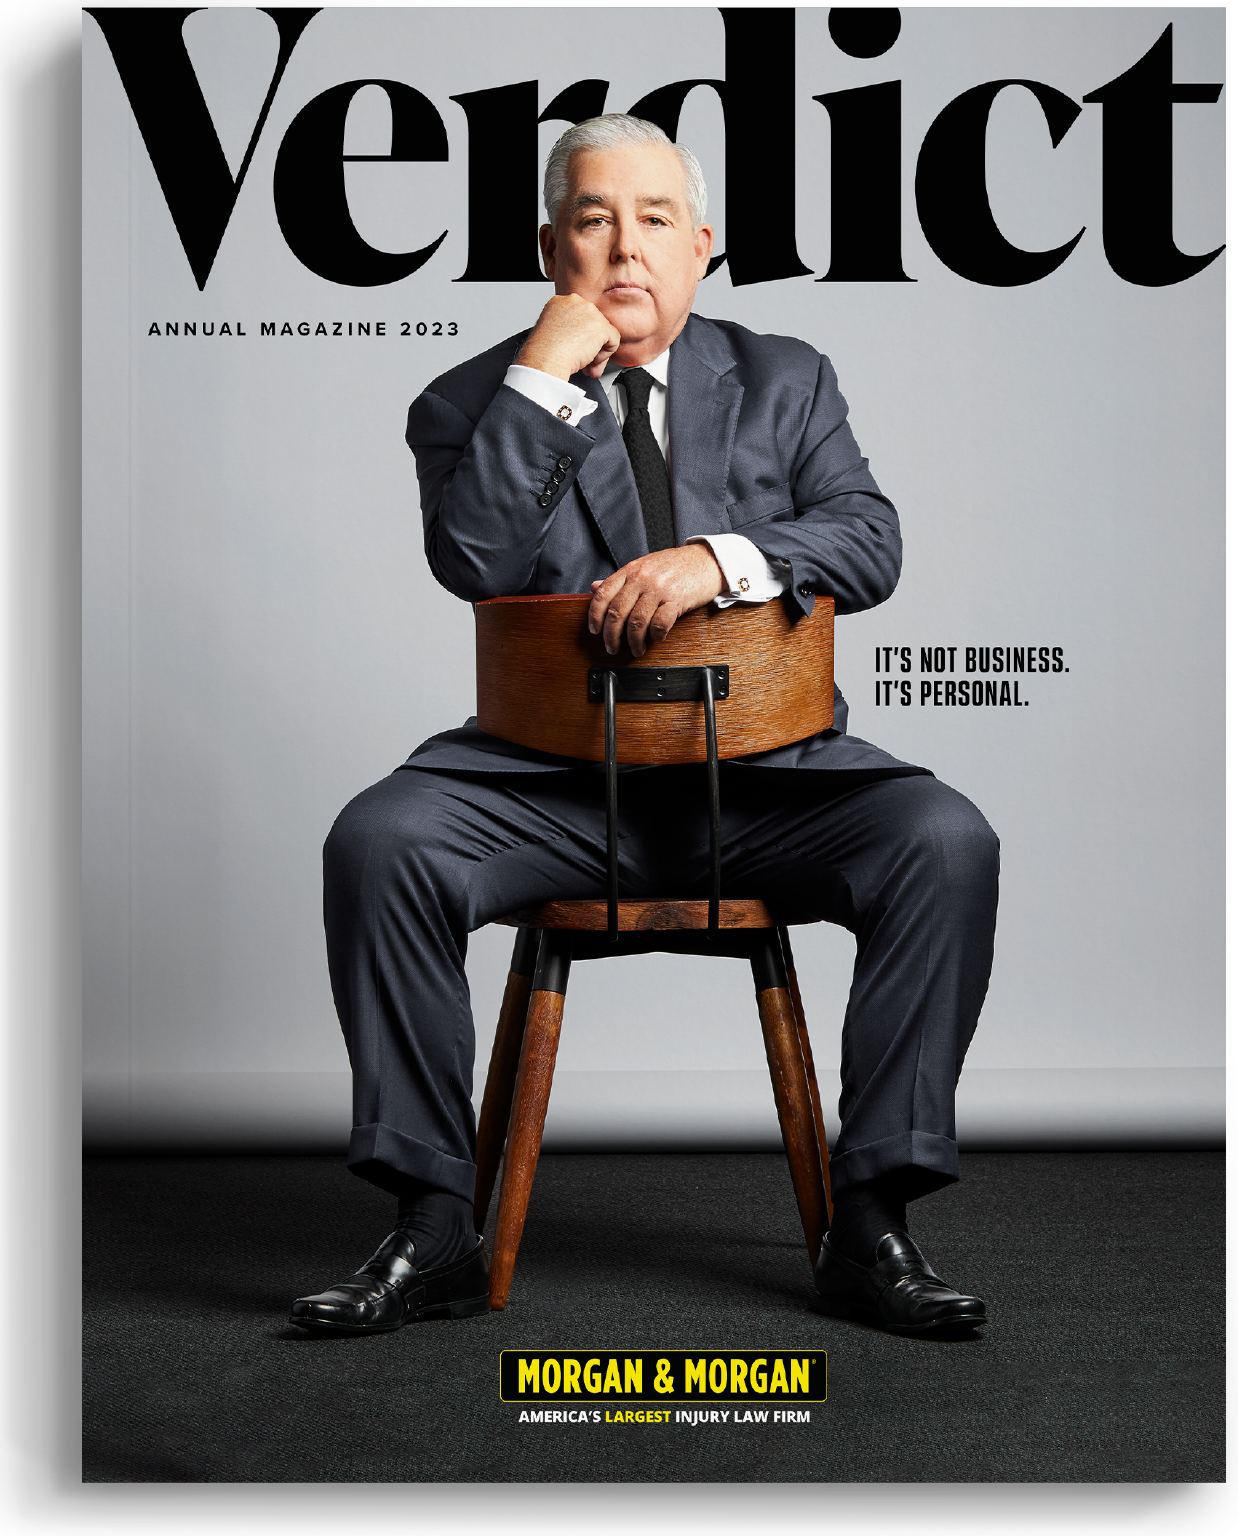 John Morgan on the cover of the 2023 Verdict Magazine